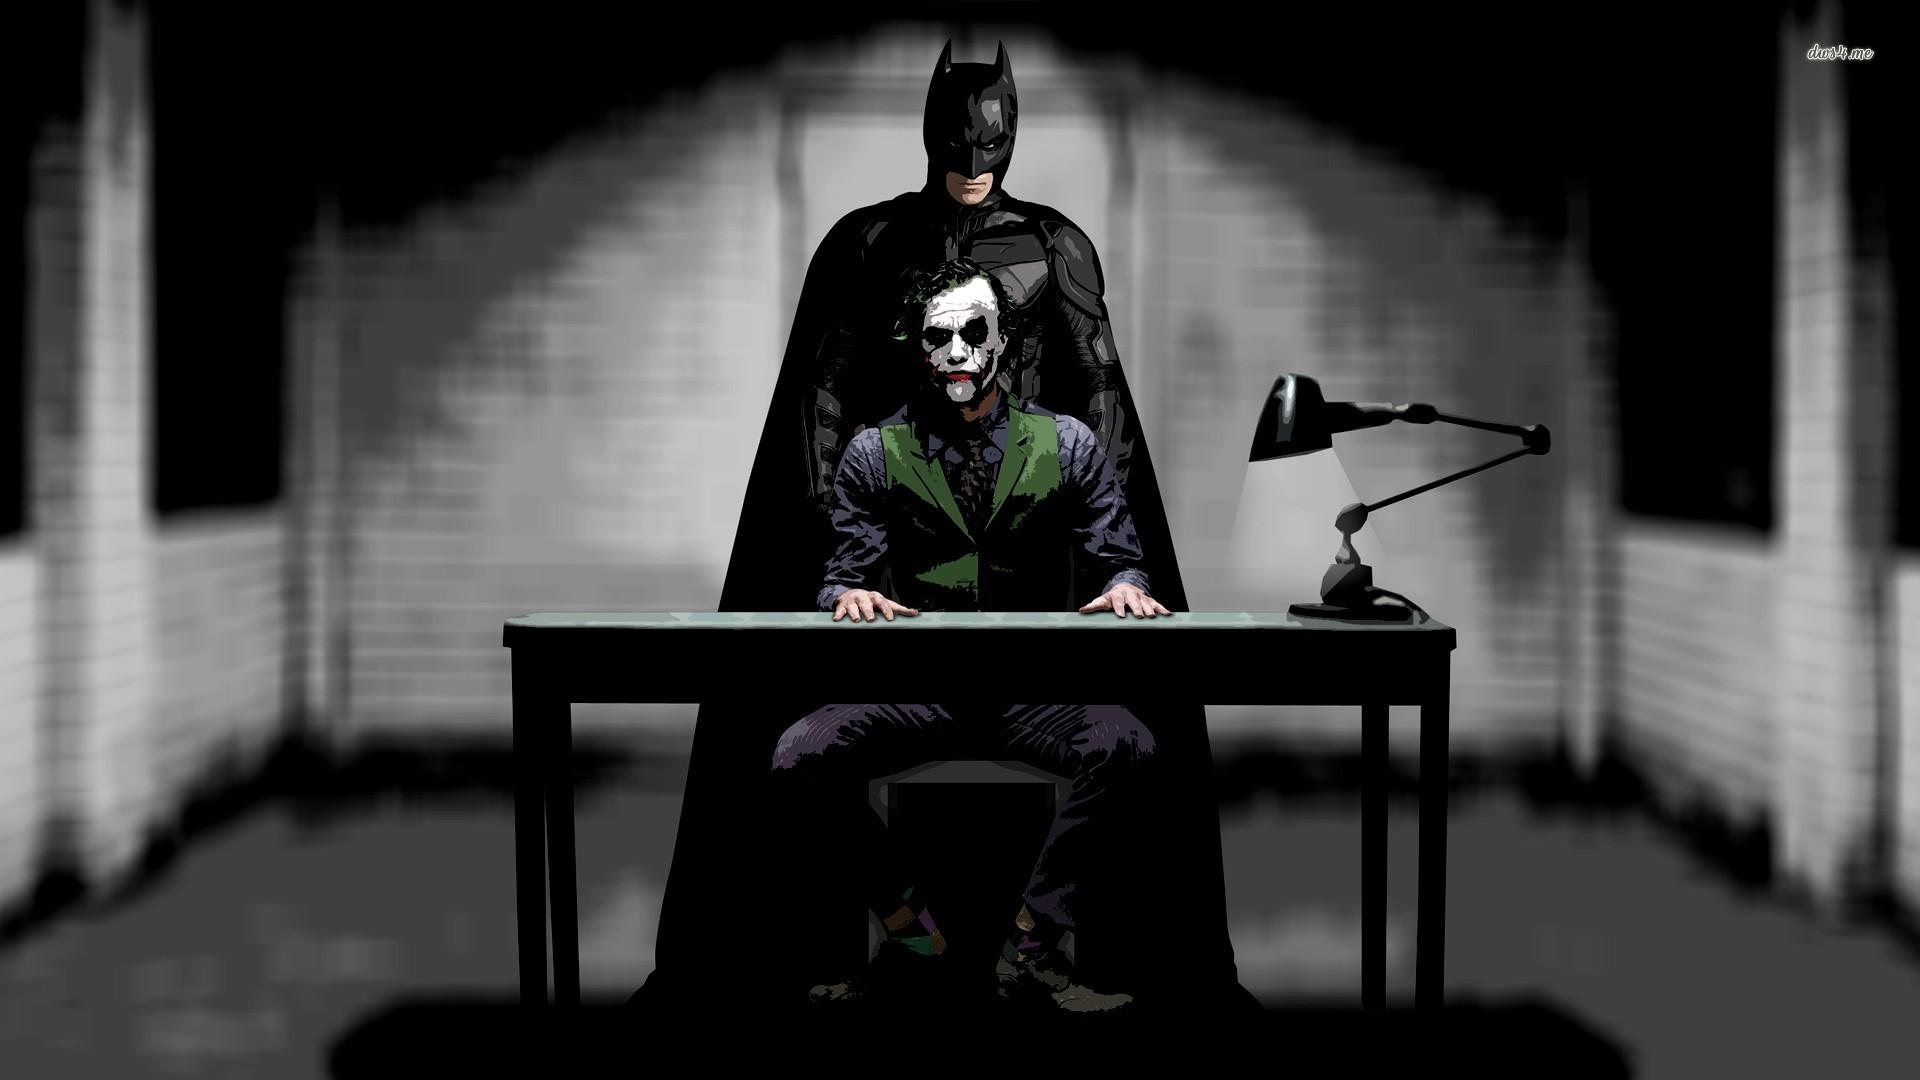 Dark Knight Joker In 4K Ultra Hd Wallpapers - Top Free Dark Knight